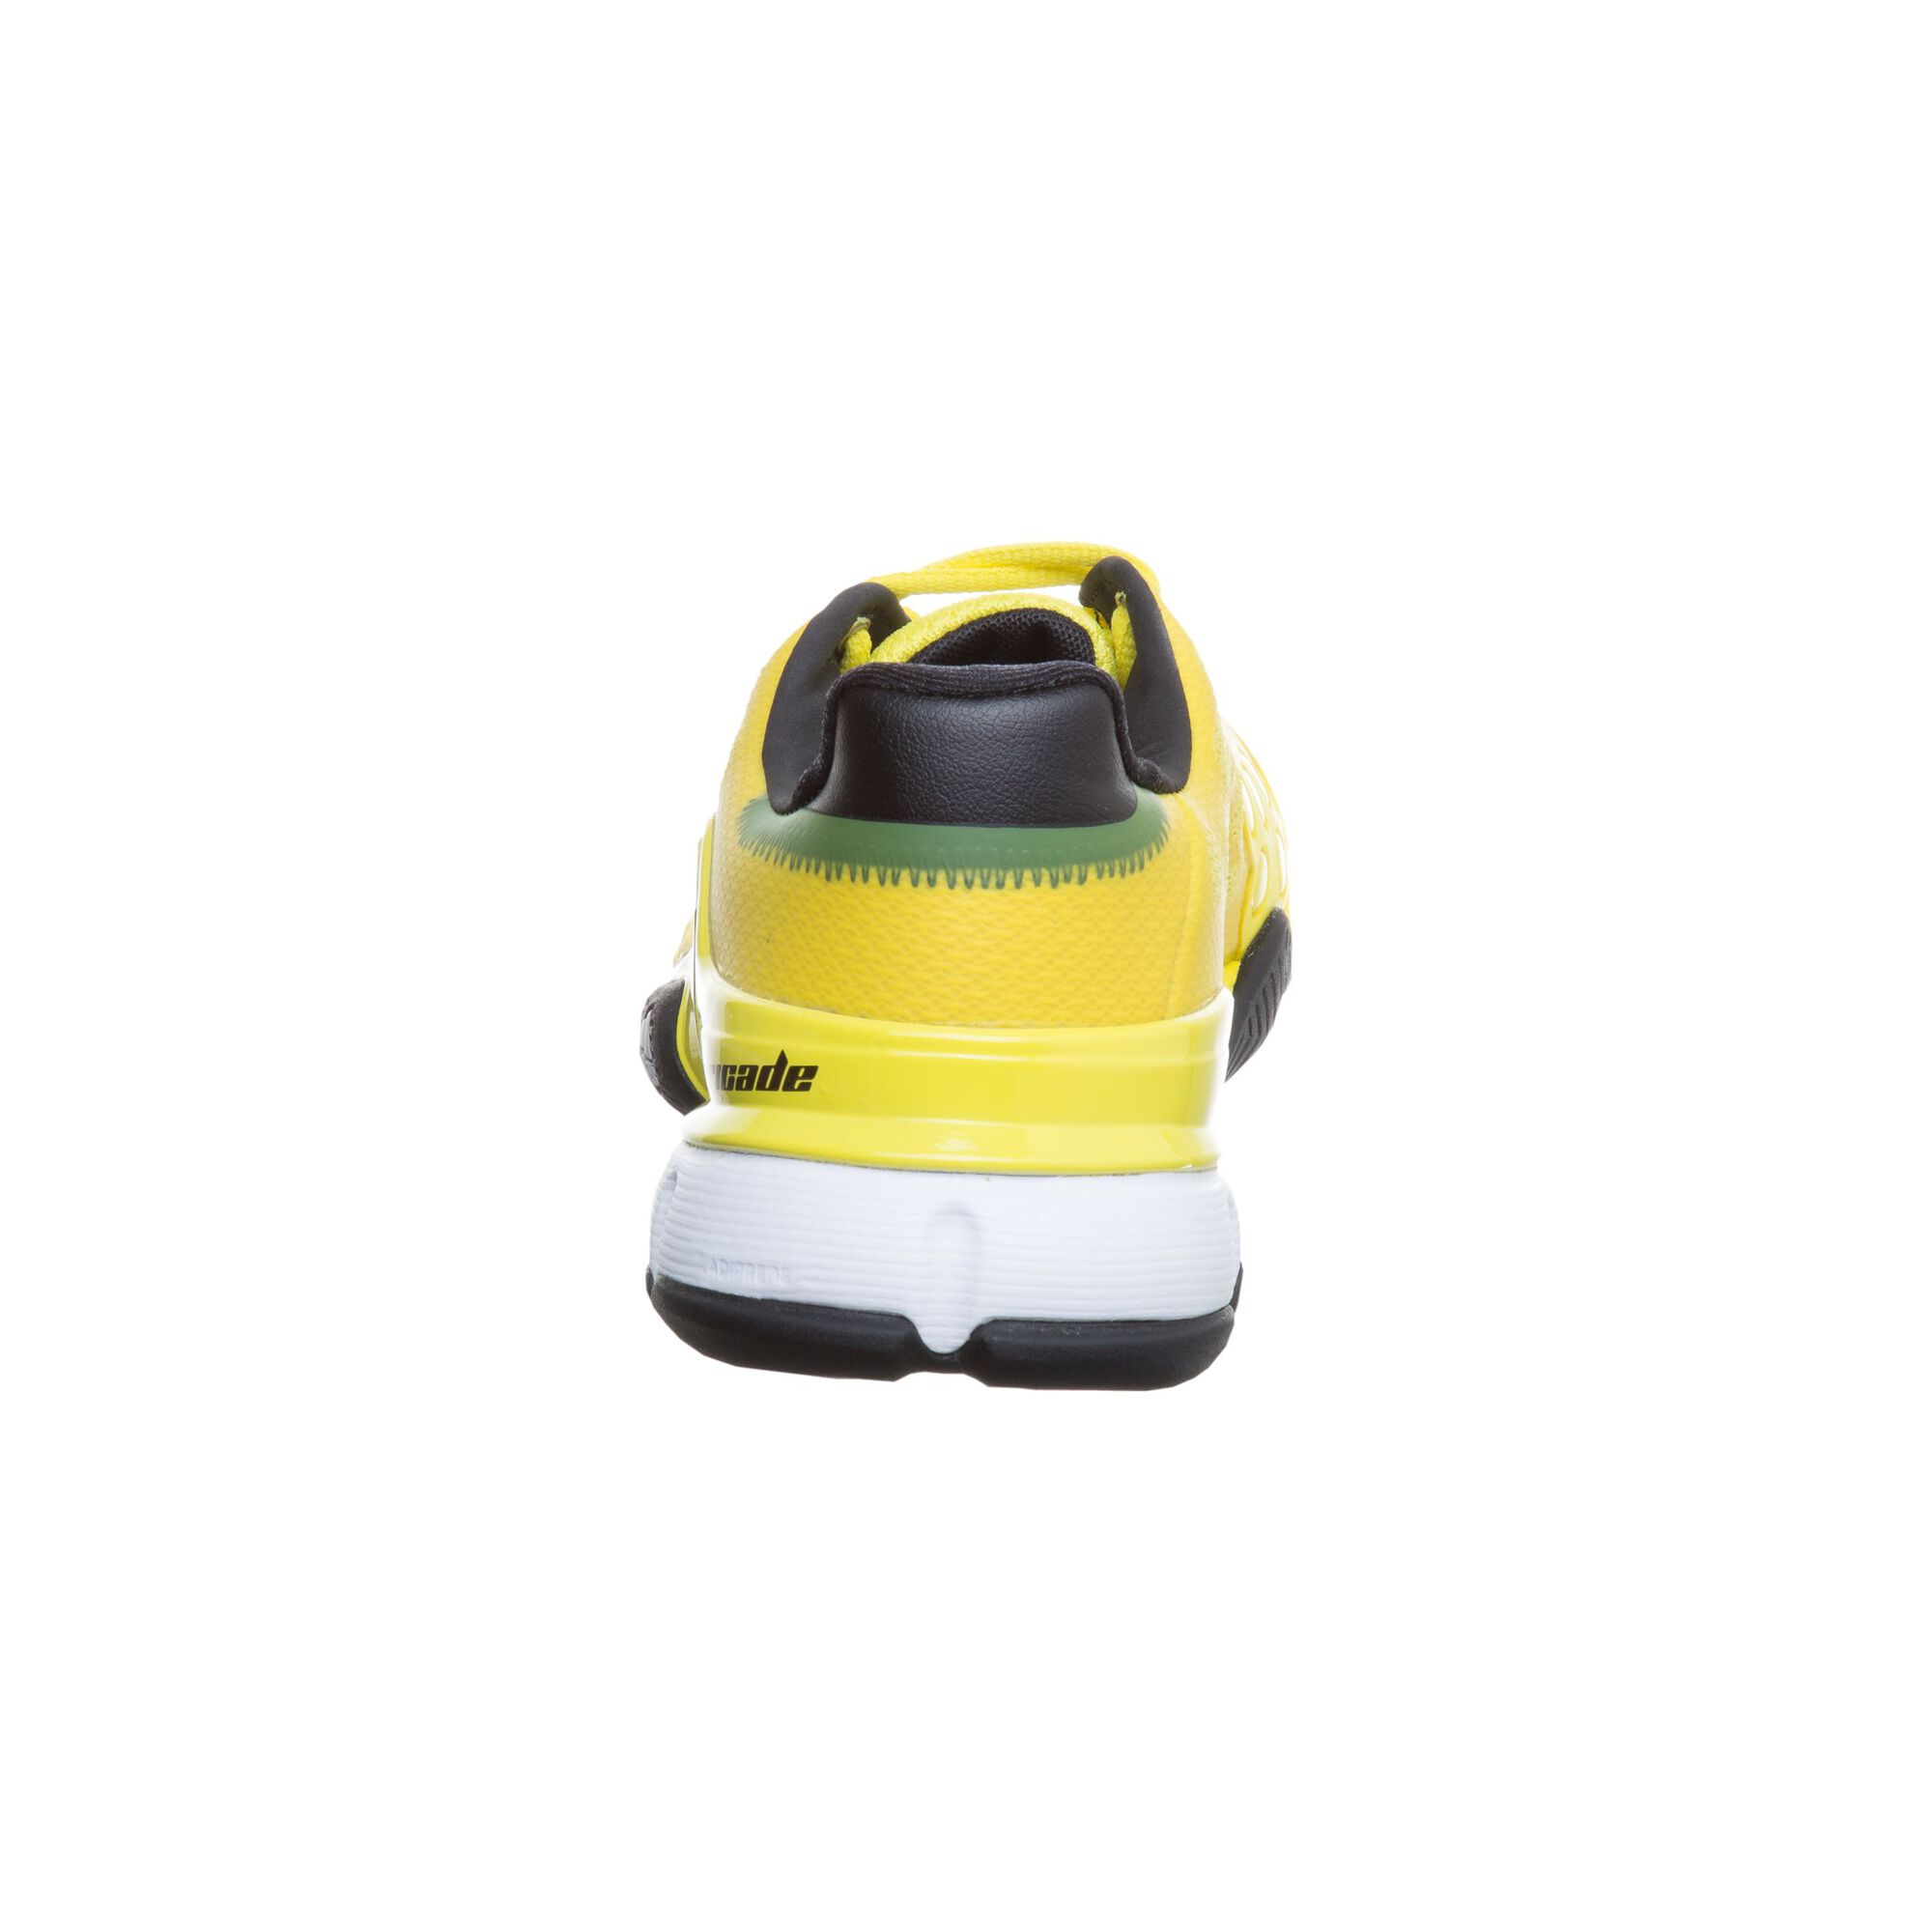 Idioot kolonie Binnenshuis buy adidas Barricade 2015 All Court Shoe Men - Yellow, Black online |  Tennis-Point